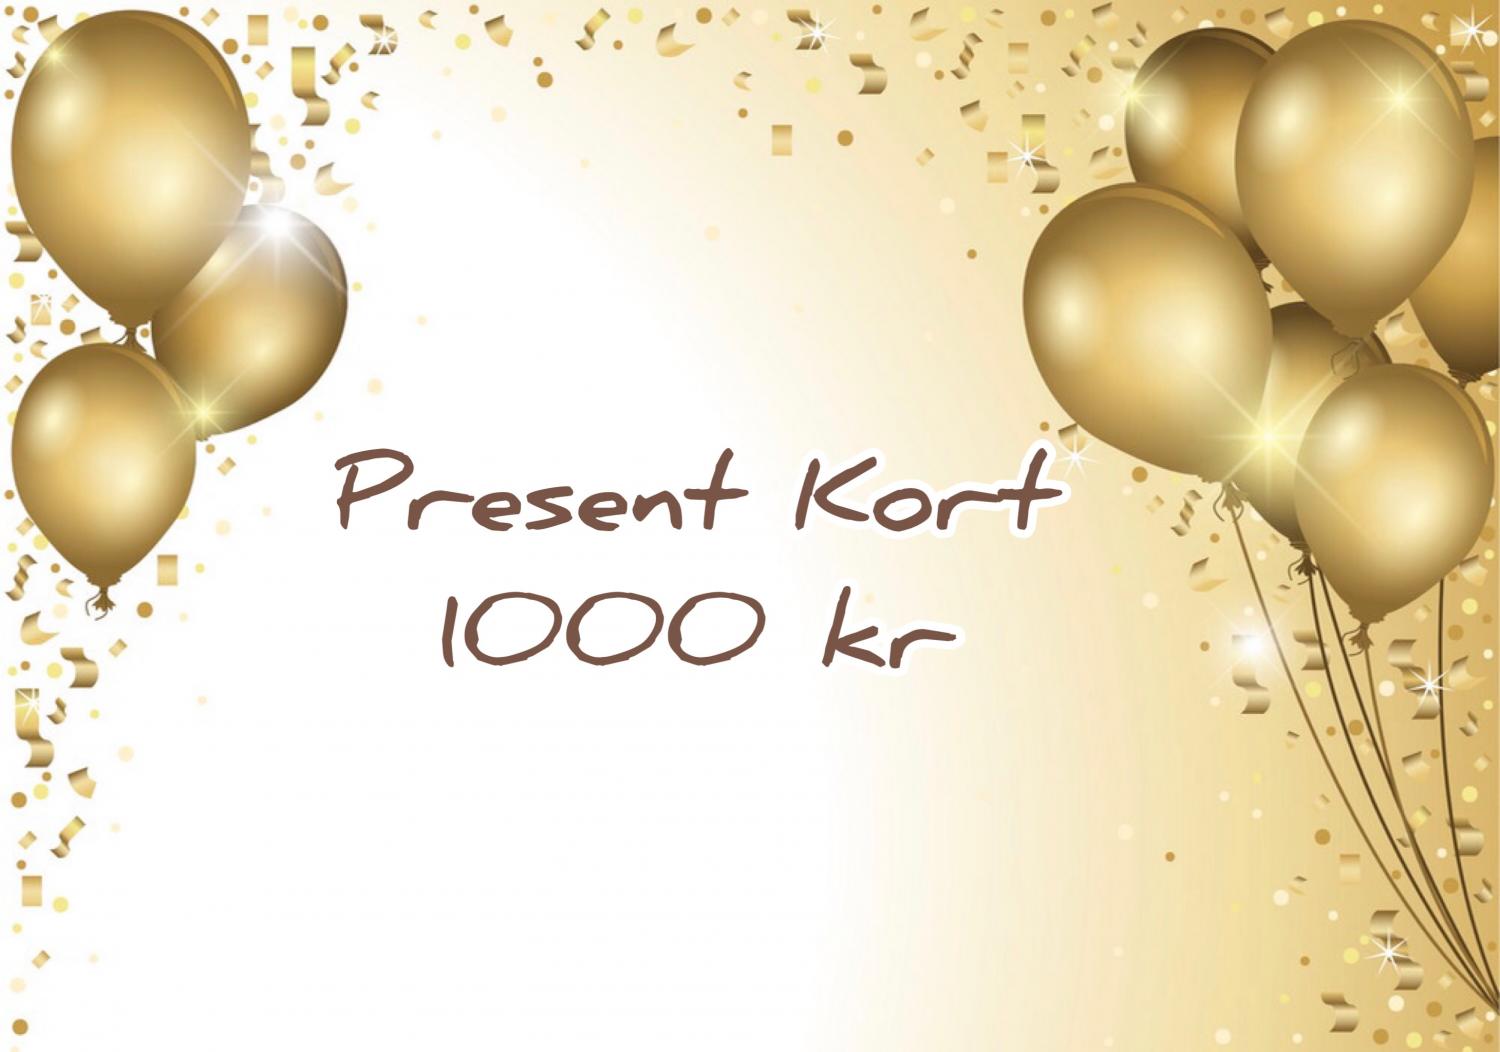 Present Kort. 1000 KR